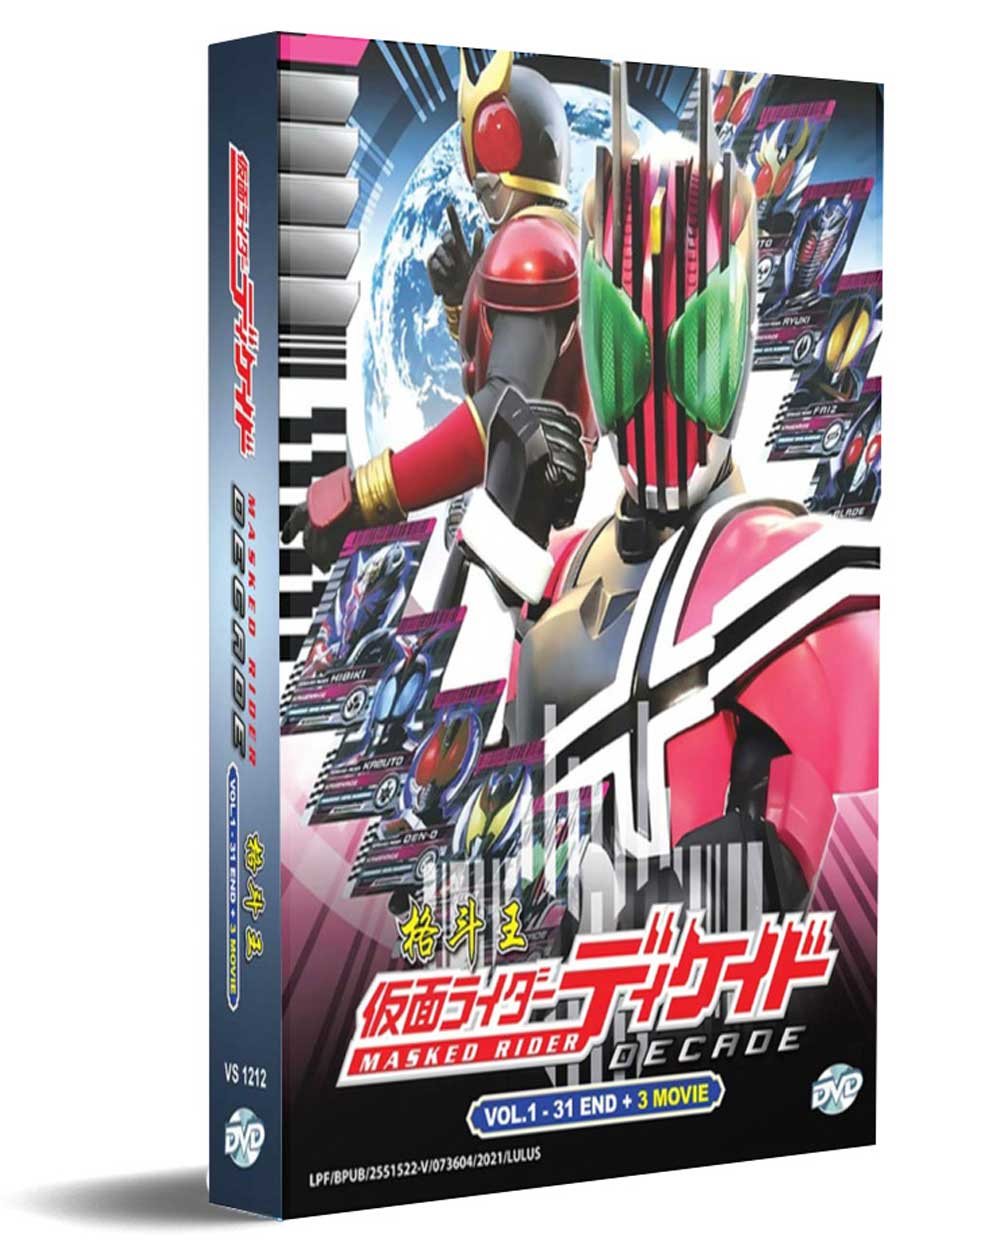 Masked Rider Decade + 3 Movie (DVD) (2009) Anime